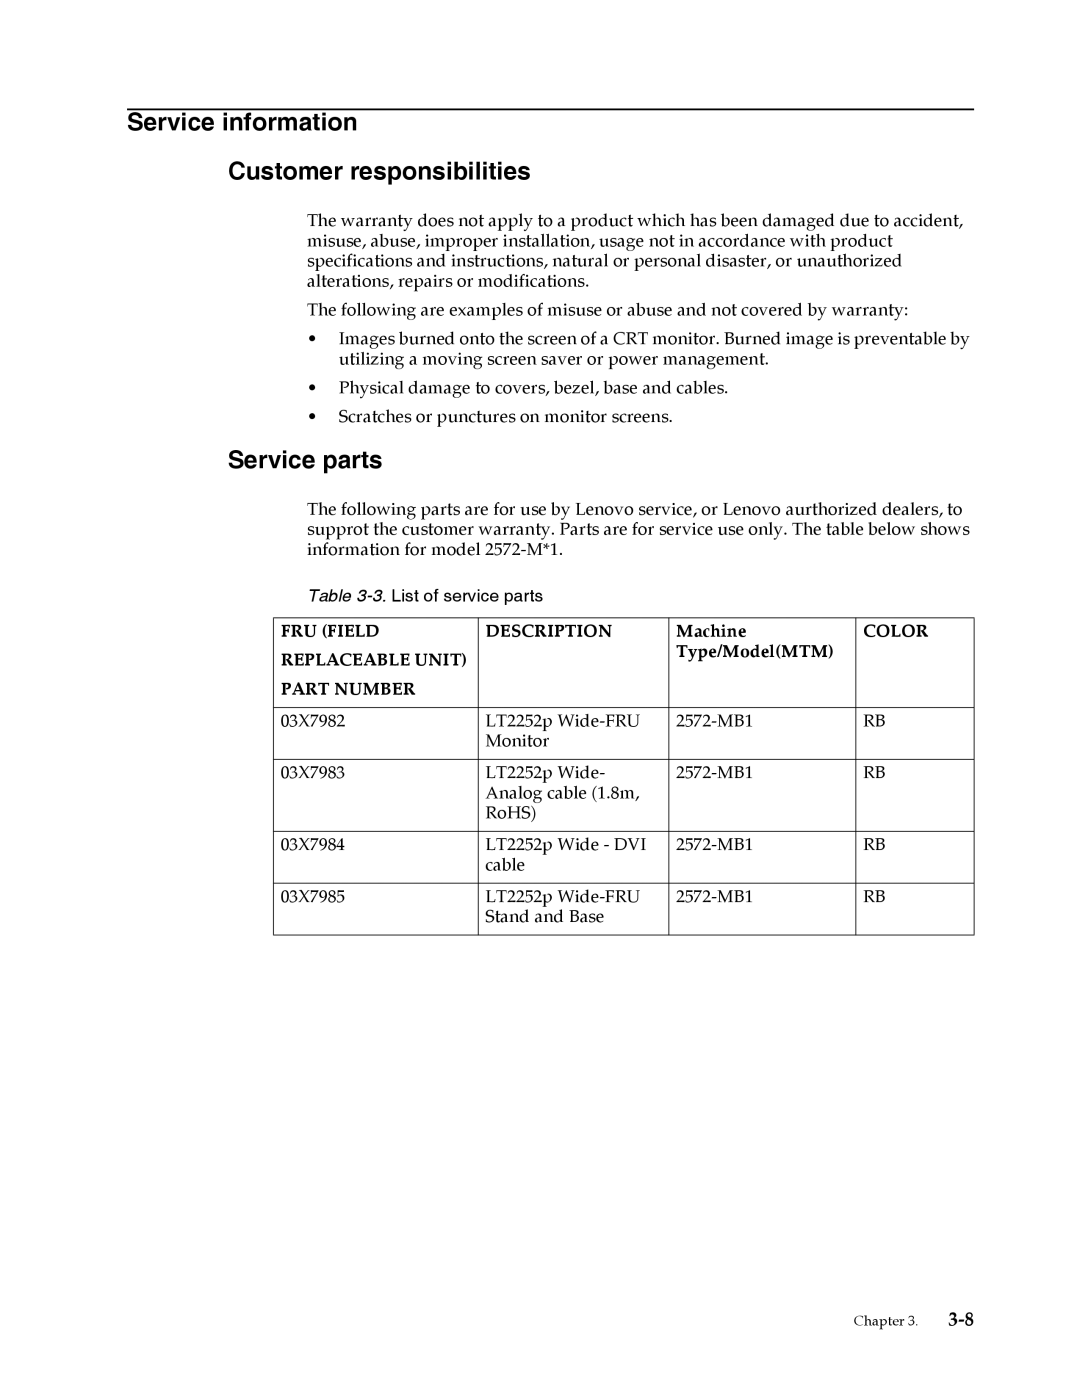 Lenovo 2572MB1 manual Service information Customer responsibilities, Service parts 